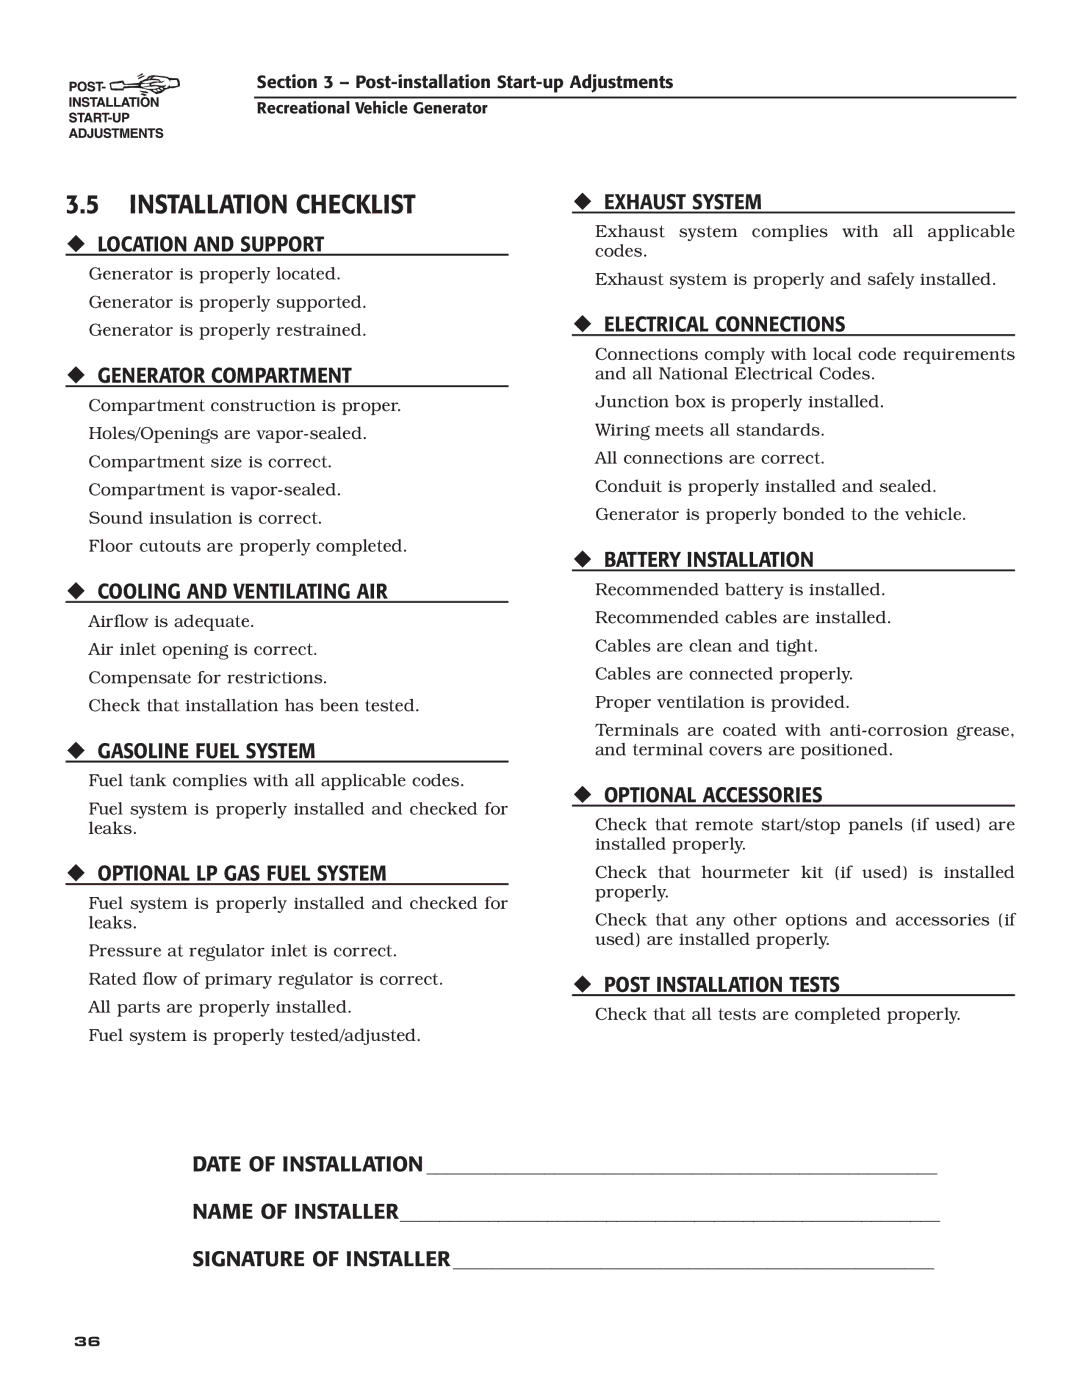 Guardian Technologies 02010-2, 04164-3 owner manual Installation Checklist 